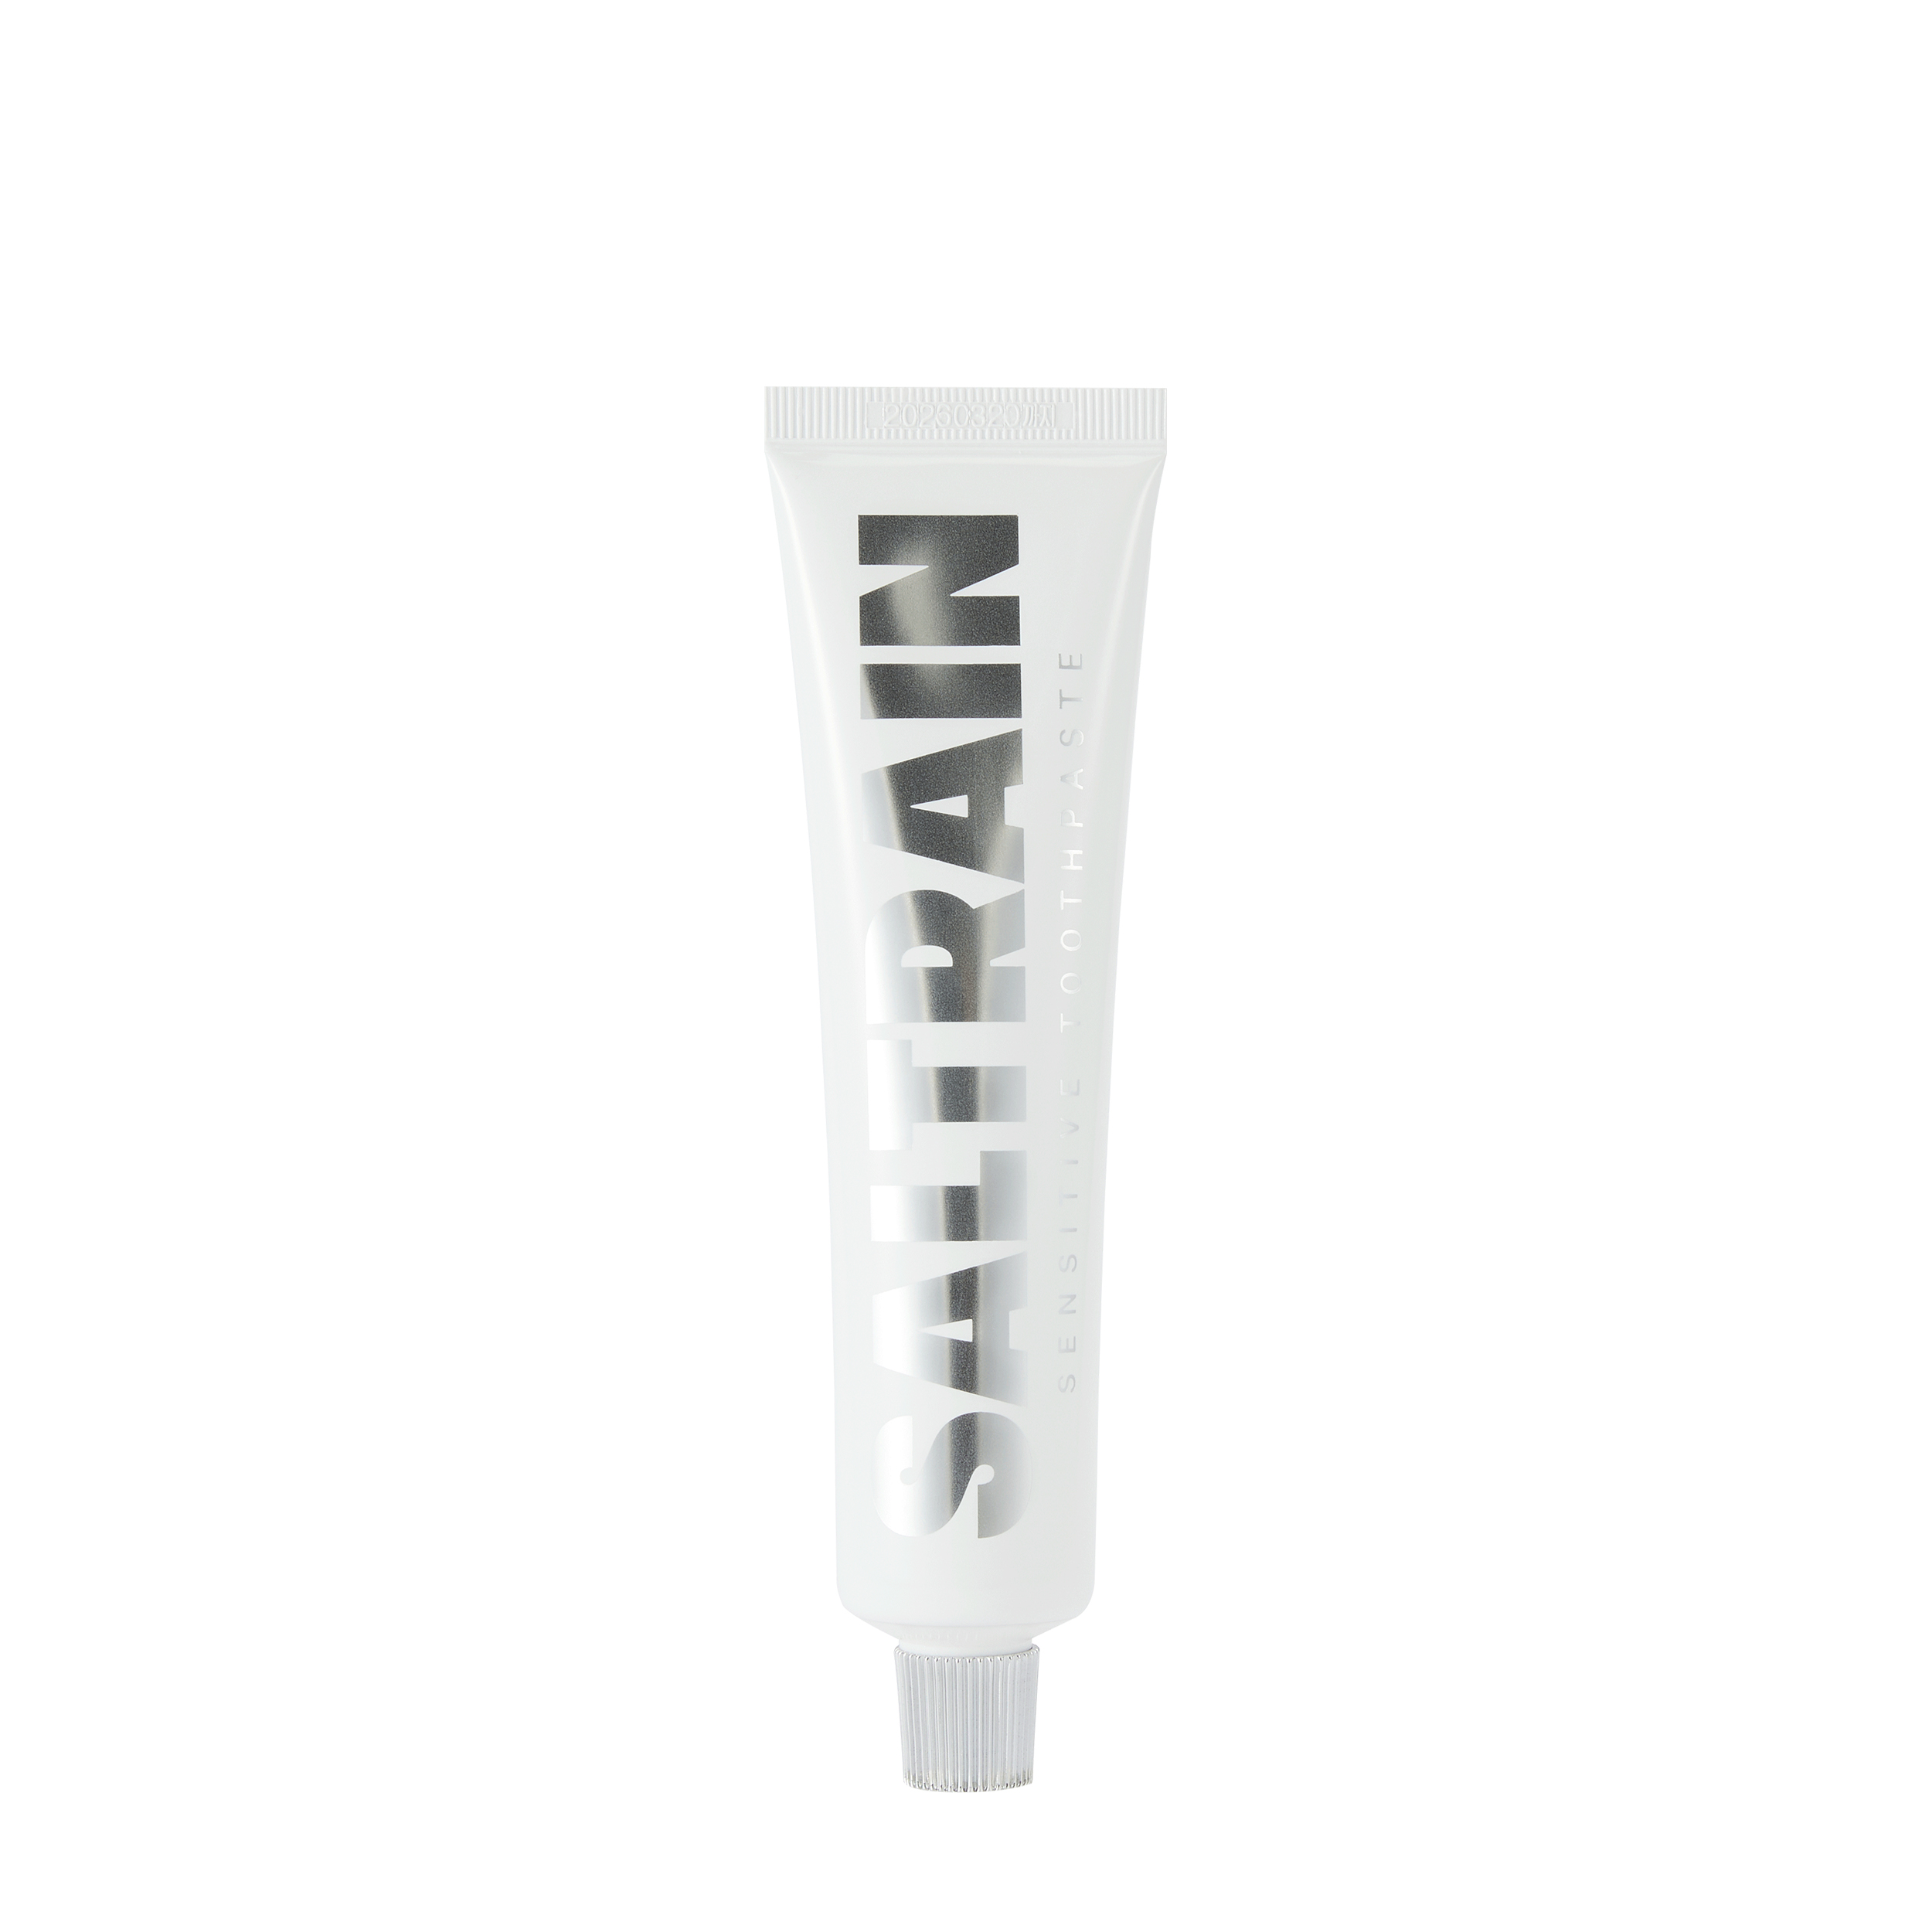 SALTRAIN SALTRAIN Серебряная зубная паста для свежего дыхания 100 гр АРТ-4908 - фото 1